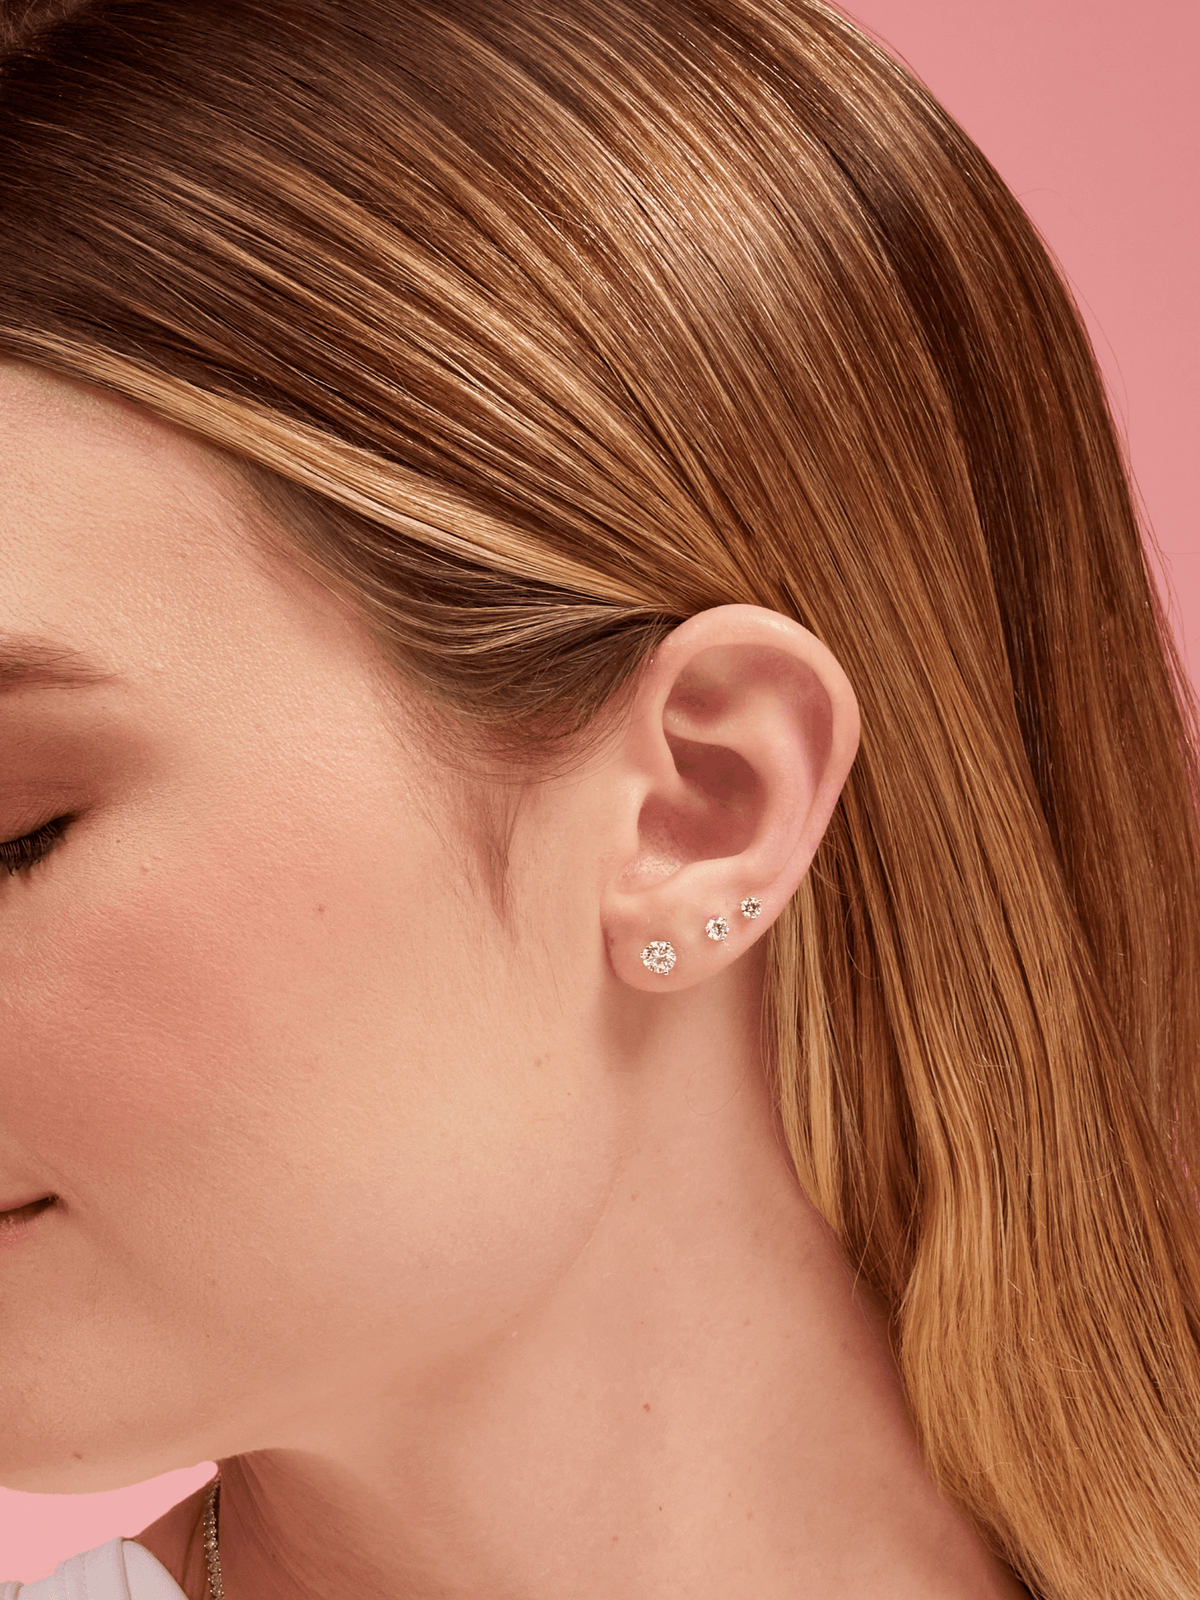 Three diamond stud earrings in different sizes on model ear